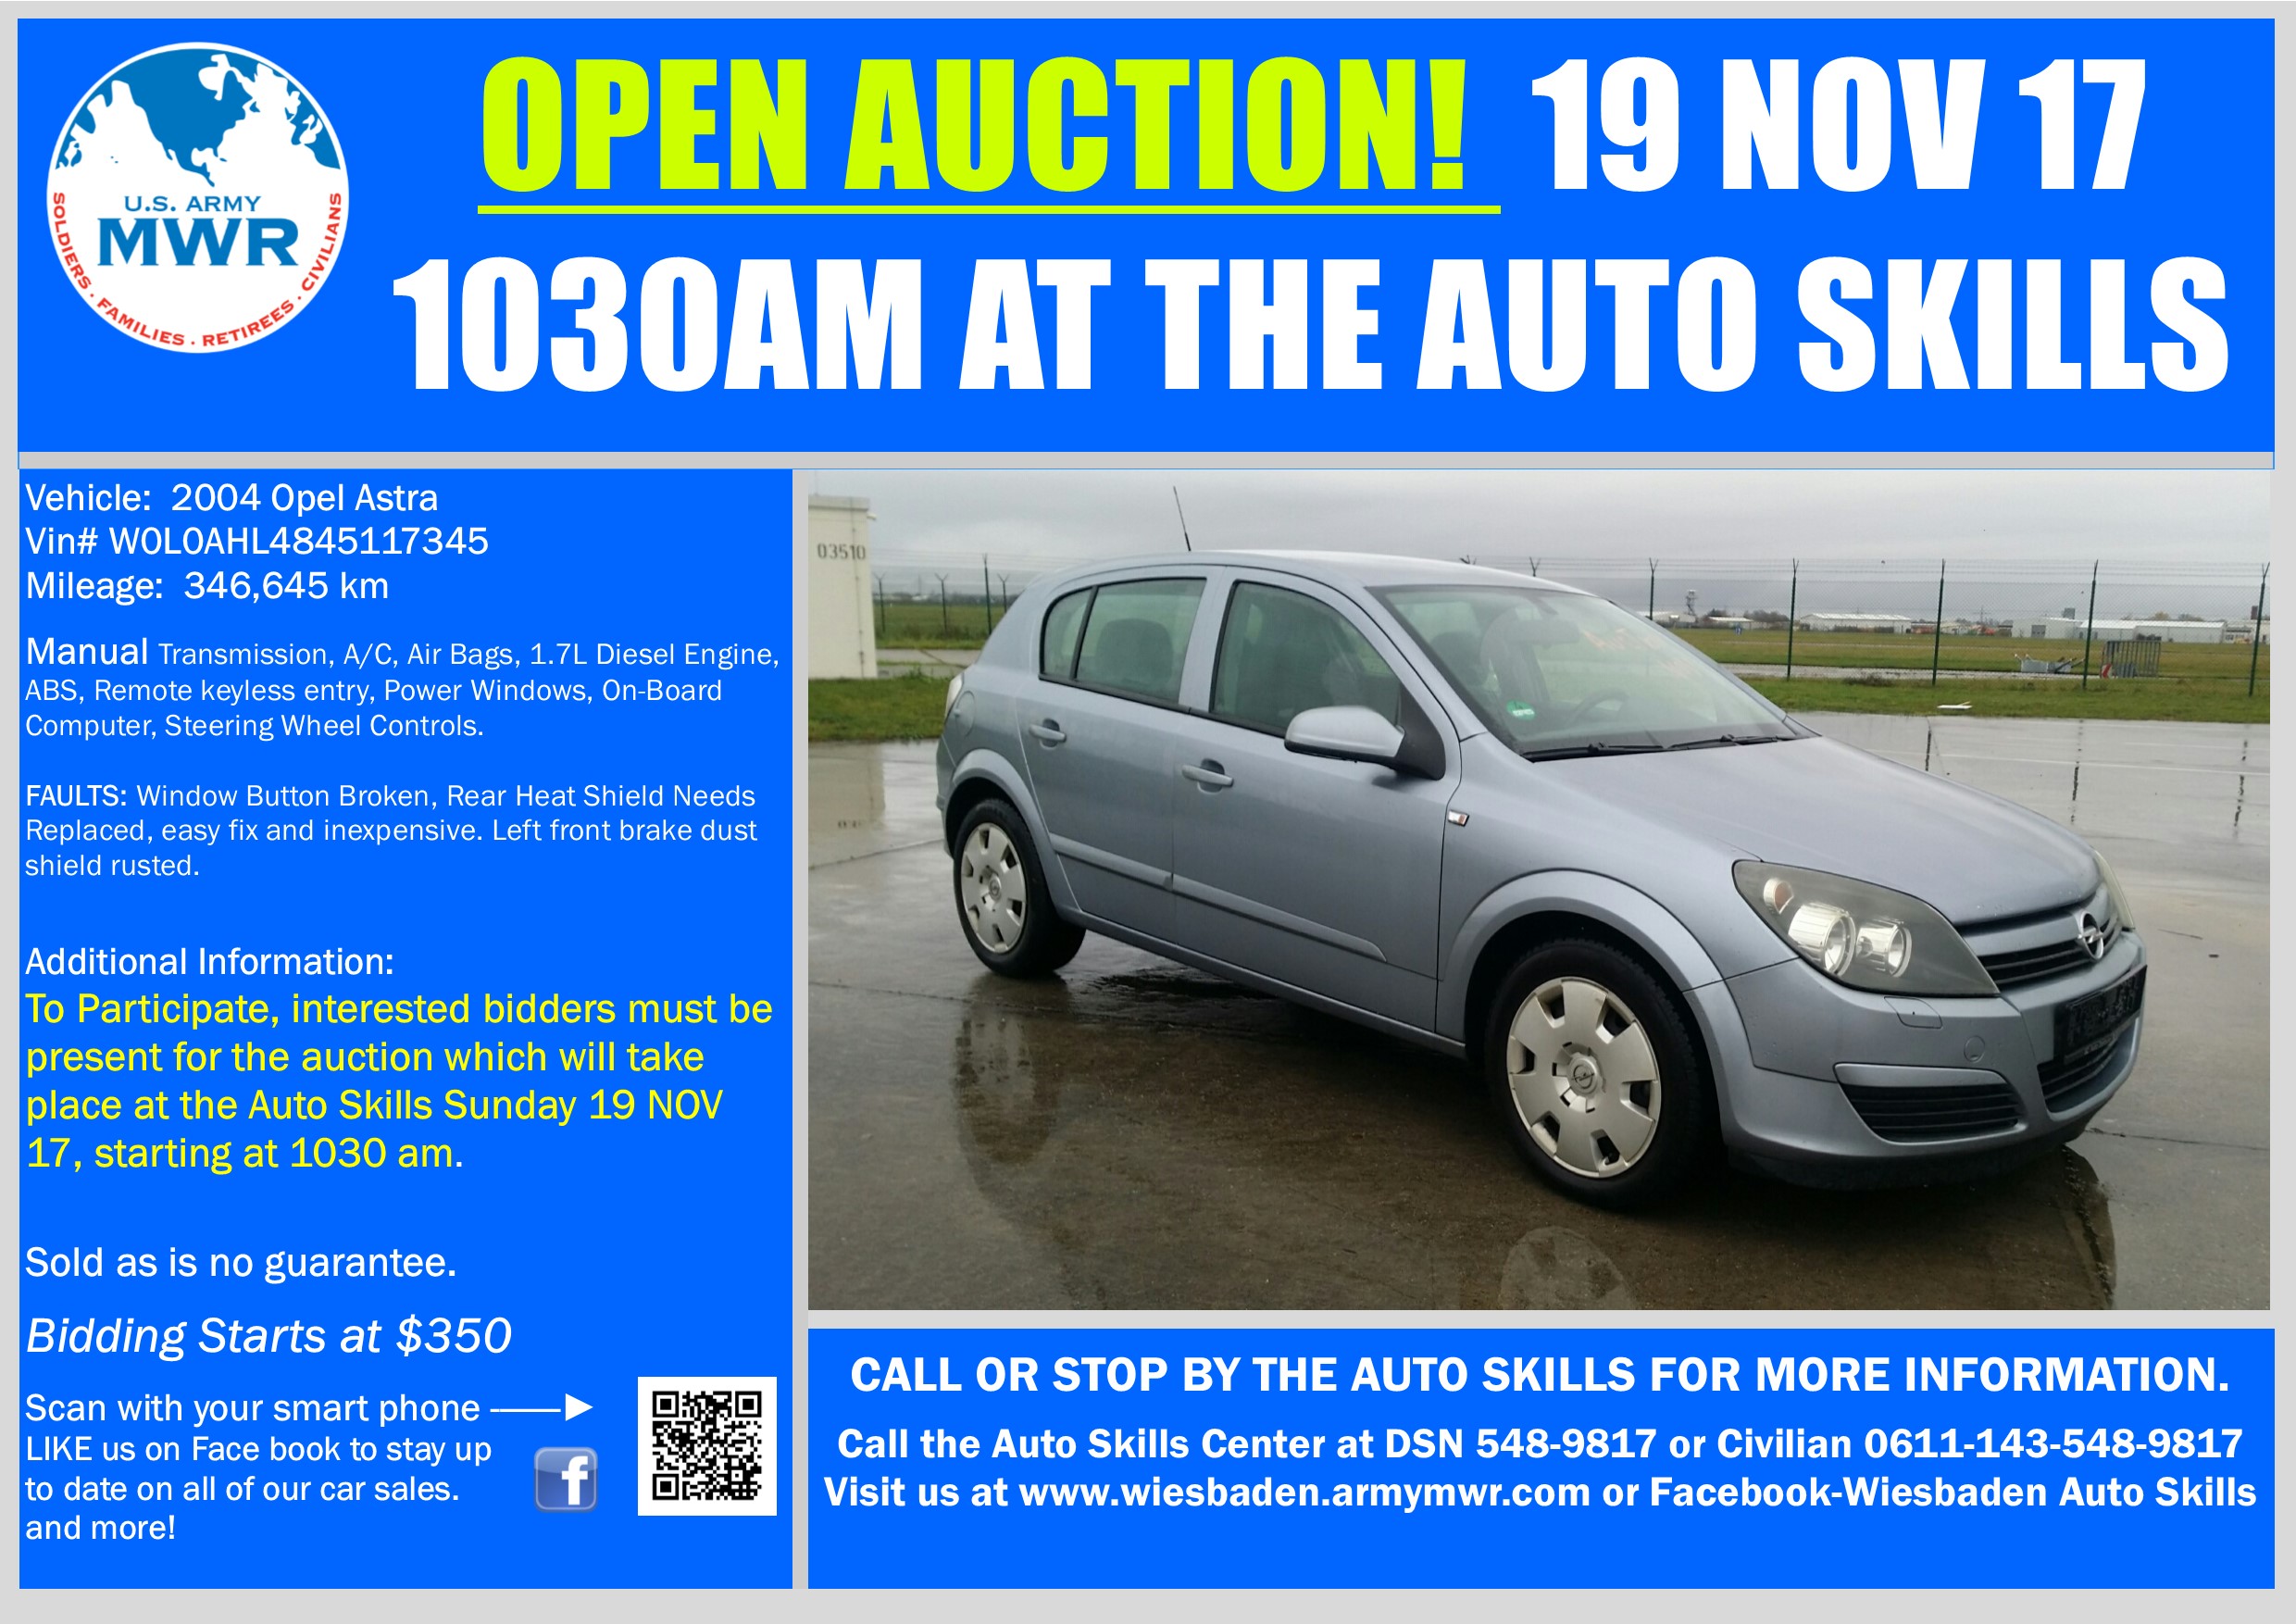 Sale_Opel Astra 19 Nov 17 Open Auction.jpg